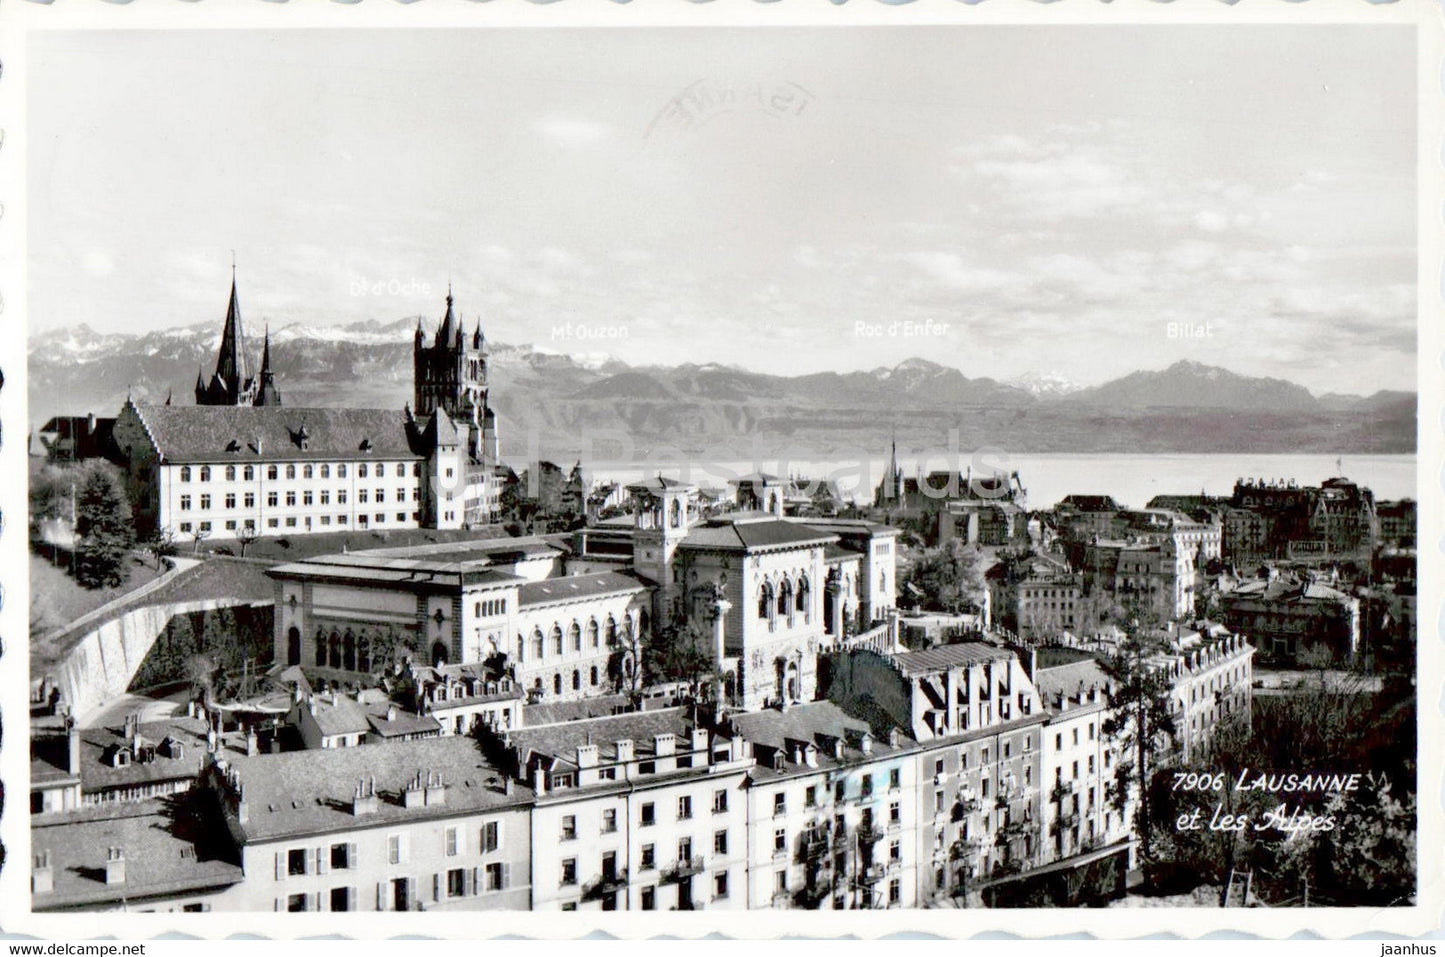 Lausanne et LEs Alpes - 7906 - old postcard - 1941 - Switzerland - used - JH Postcards